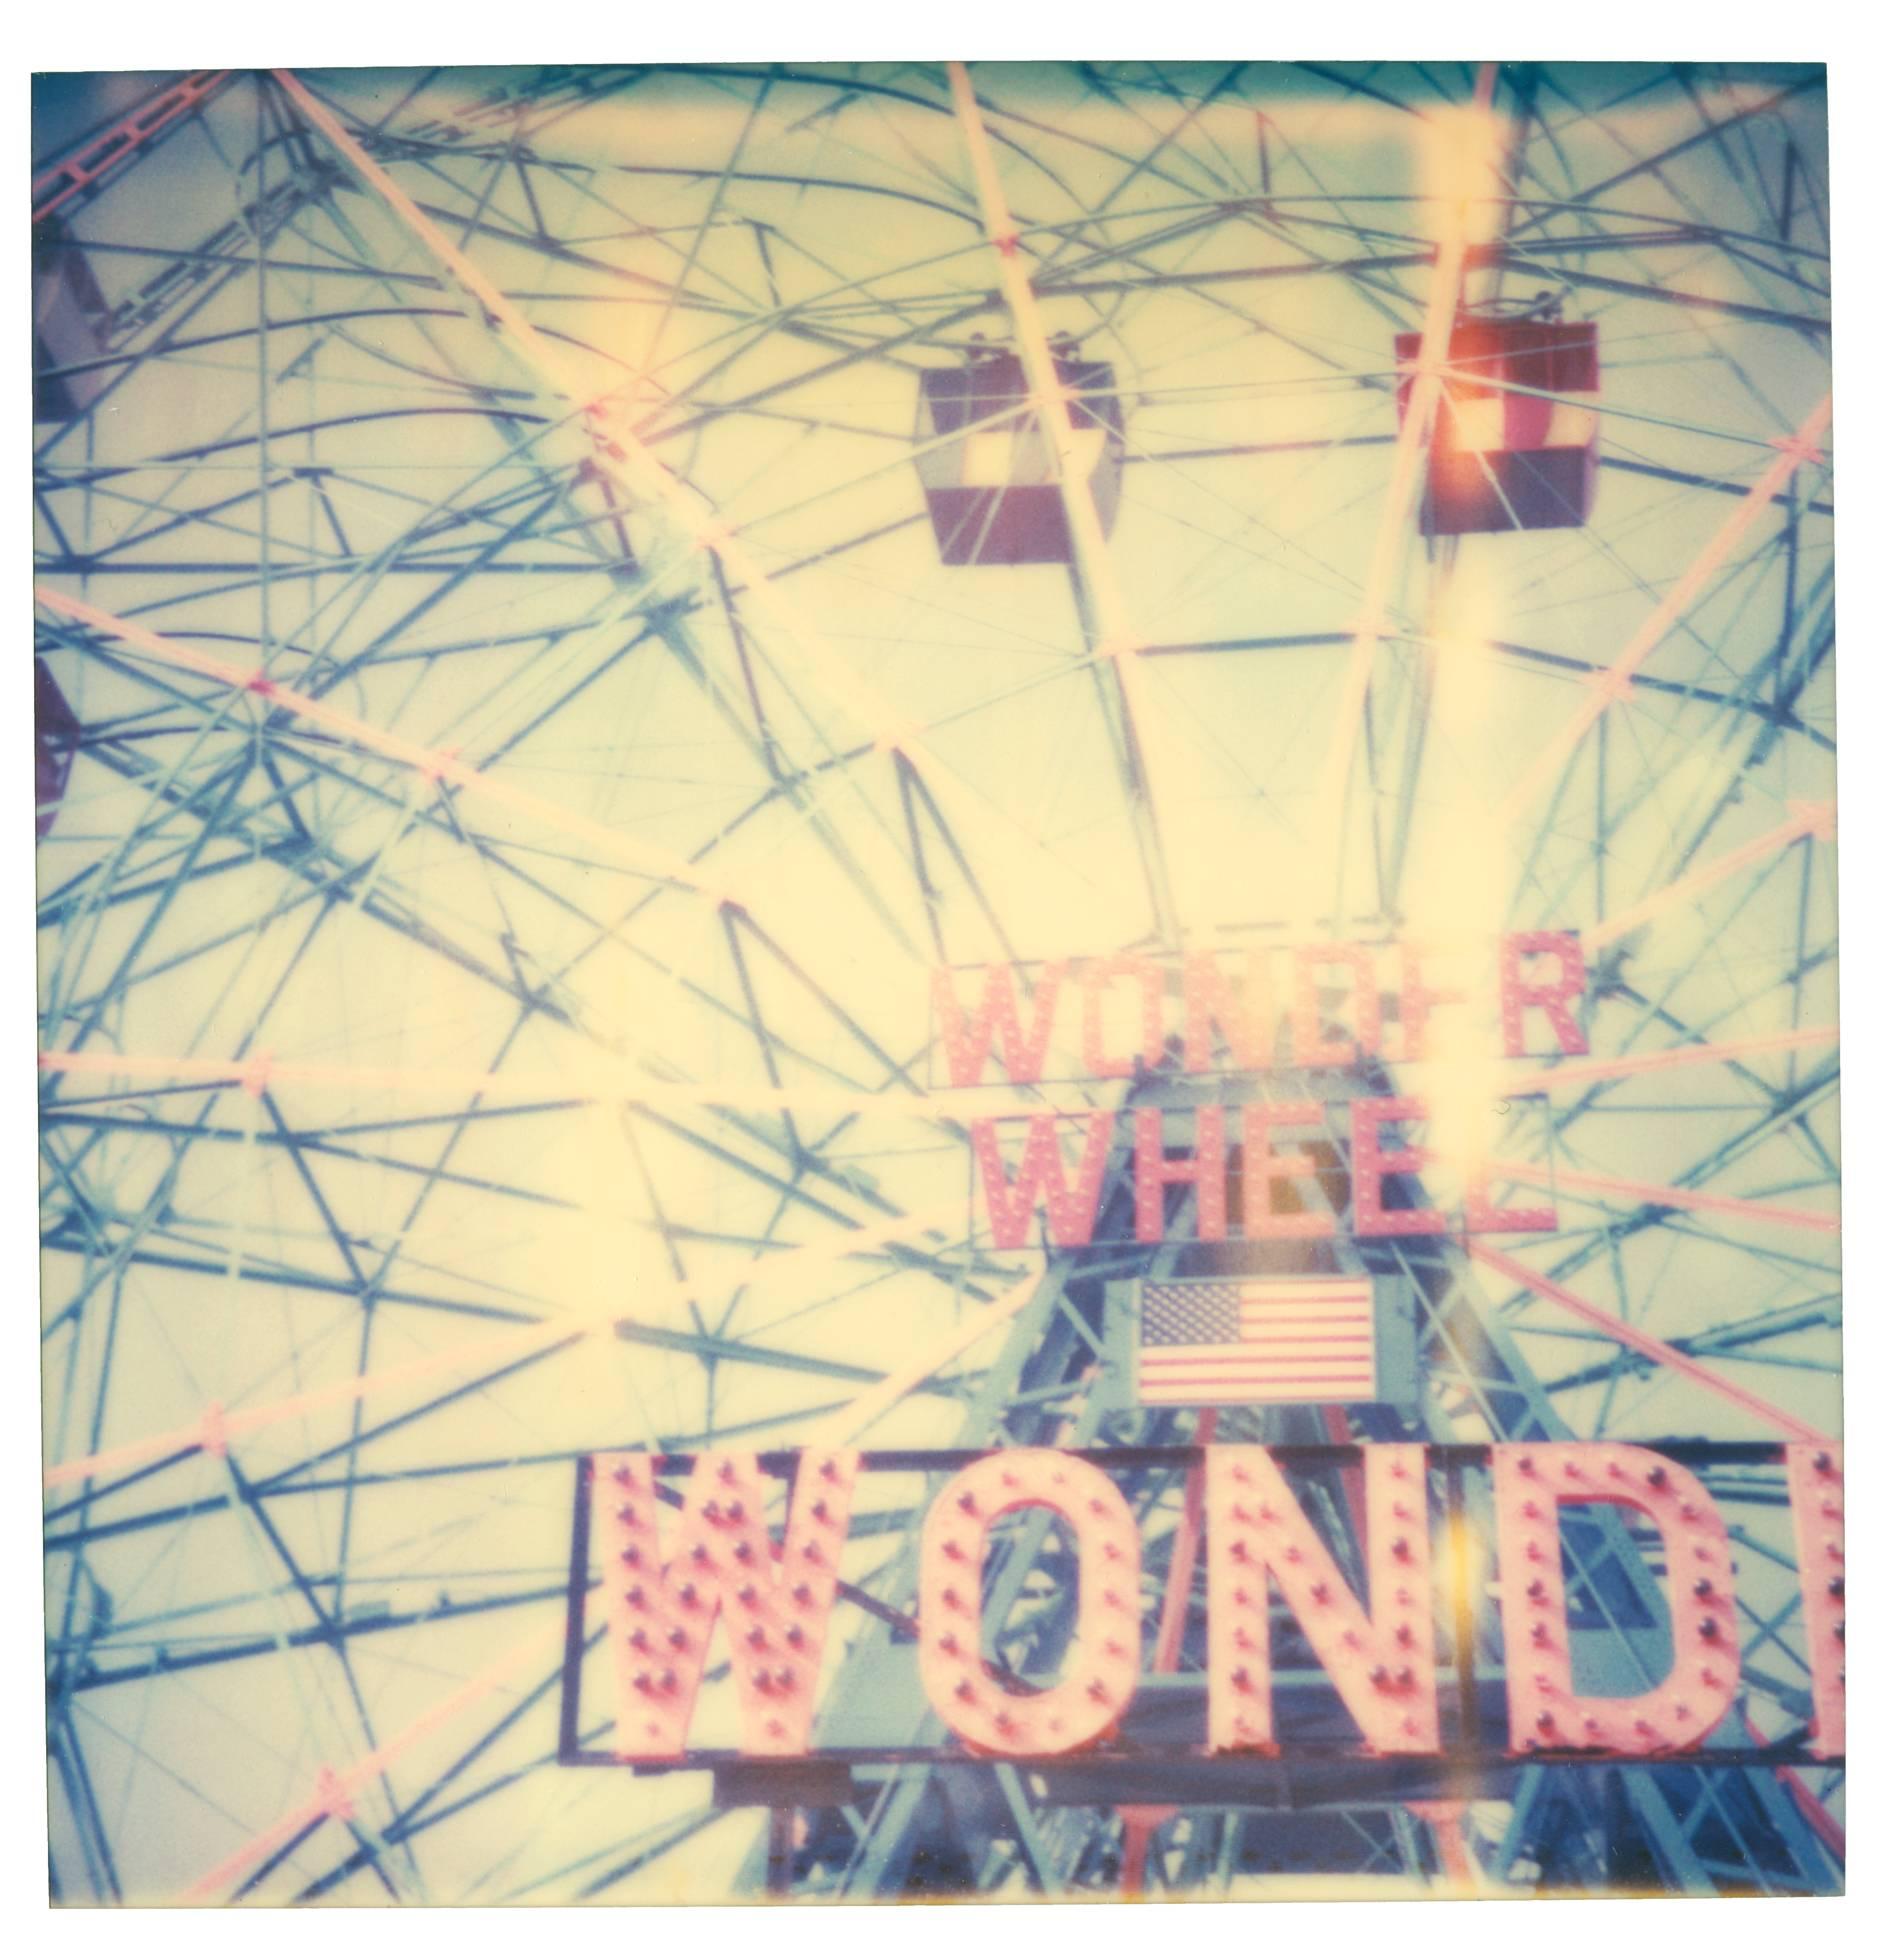 Stefanie Schneider Landscape Photograph - Wonder Wheel from the movie Stay based on a Polaroid